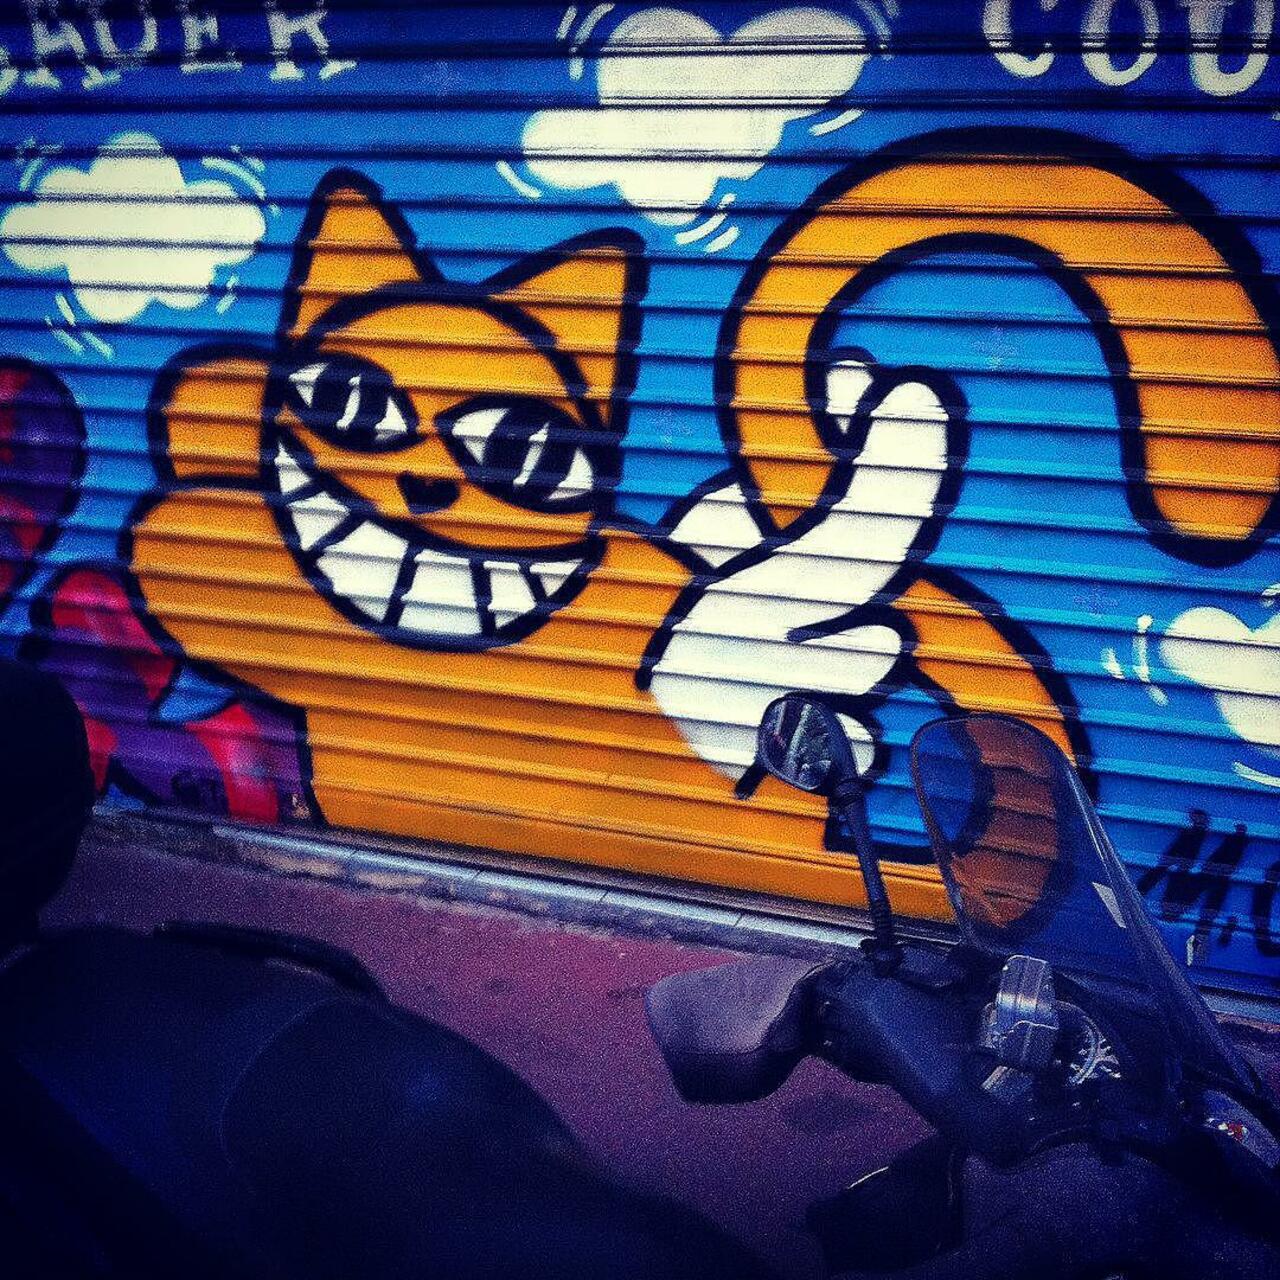 #Paris #graffiti photo by @anne__sofy http://ift.tt/1P5tlUI #StreetArt http://t.co/6Zbuc038Ht